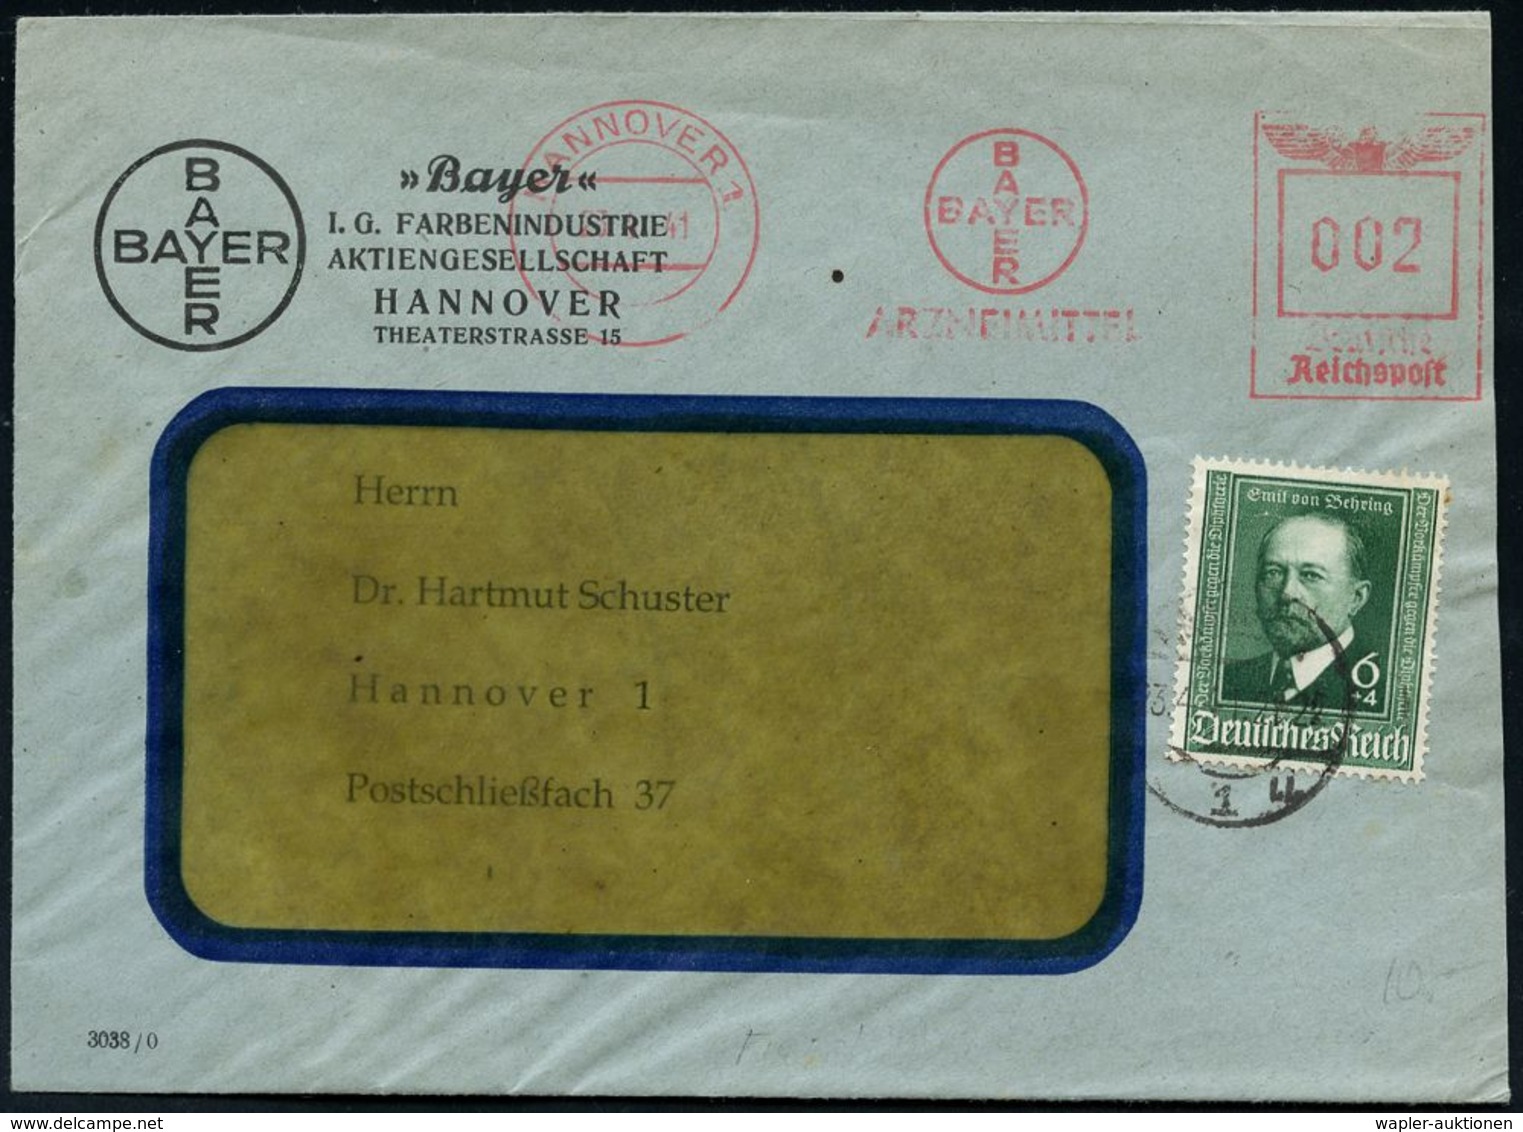 I.-G.-FARBEN INDUSTRIE, TOCHTERFIRMEN & NACHFOLGER : HANNOVER 1/ BAYER/ ARZNEUMITTEL 1941 (23.4.) AFS 002 Pf. (Firmen-Lo - Chimie